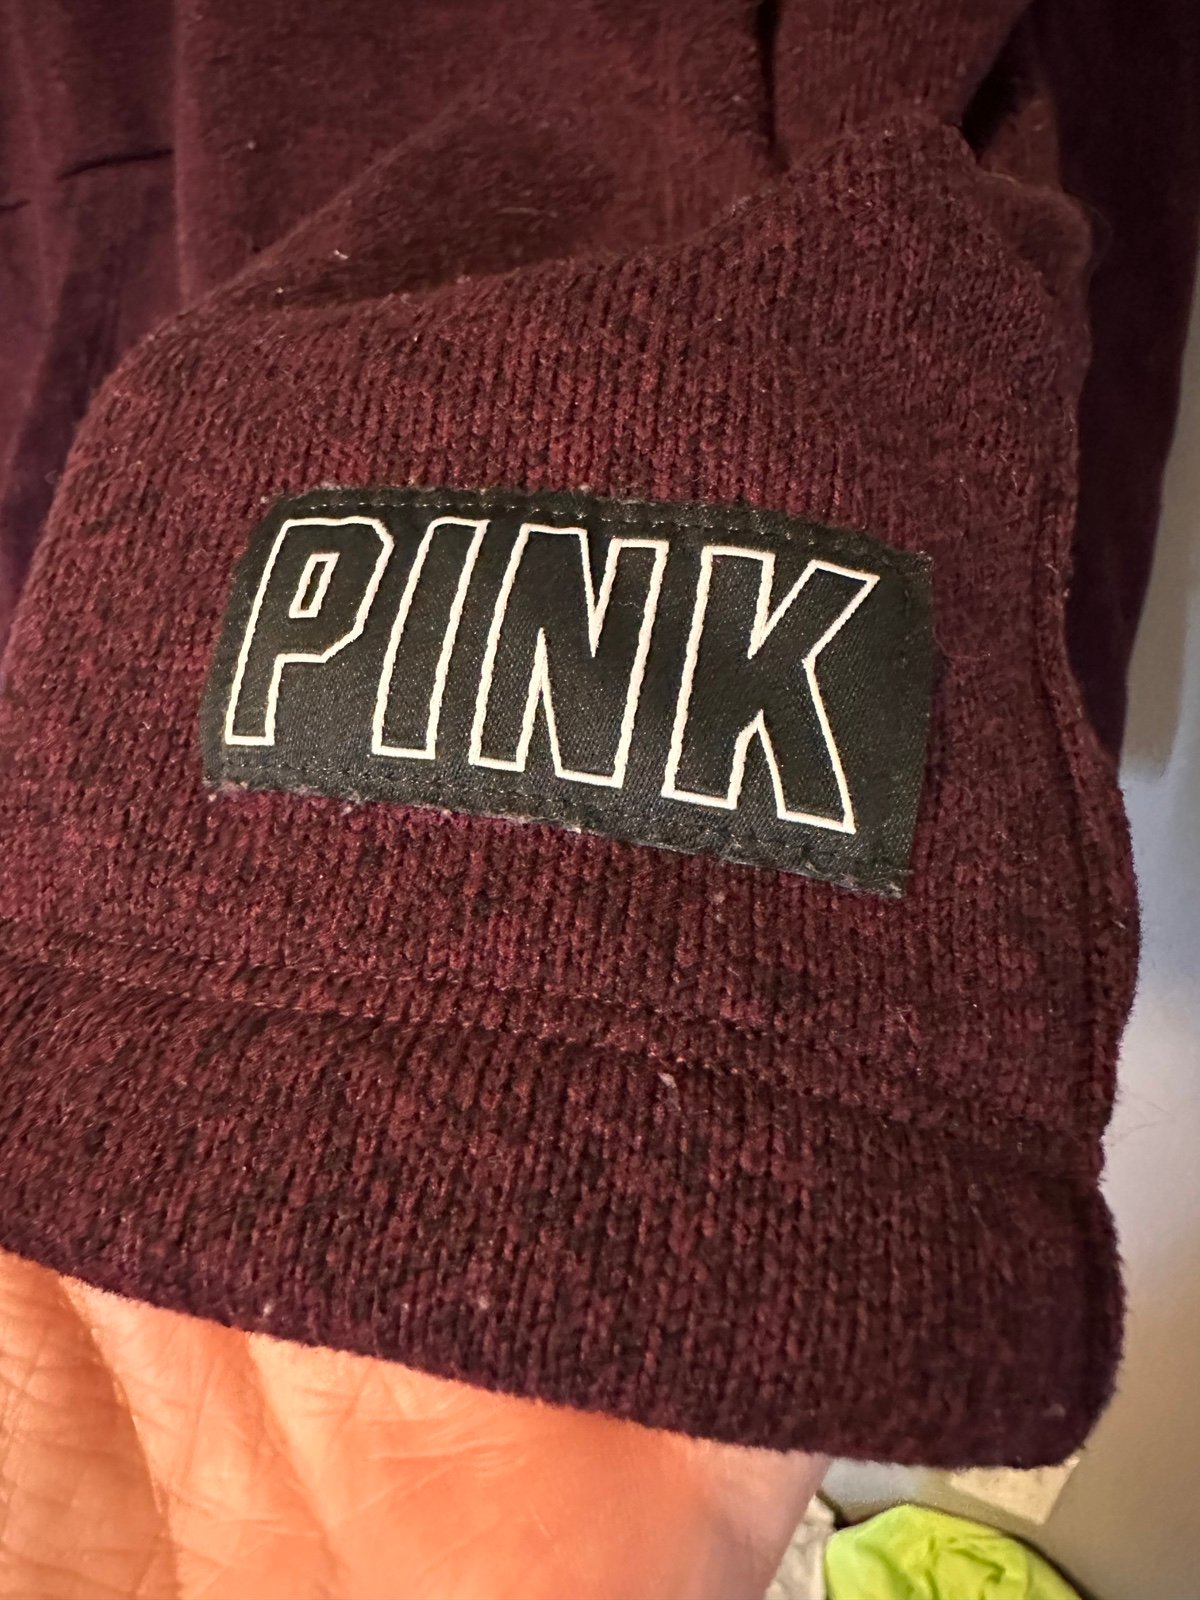 Great Pink Victoria’s Secret  maroon 1/4 zip up sweatshirt size small onDAb0oEp Cool